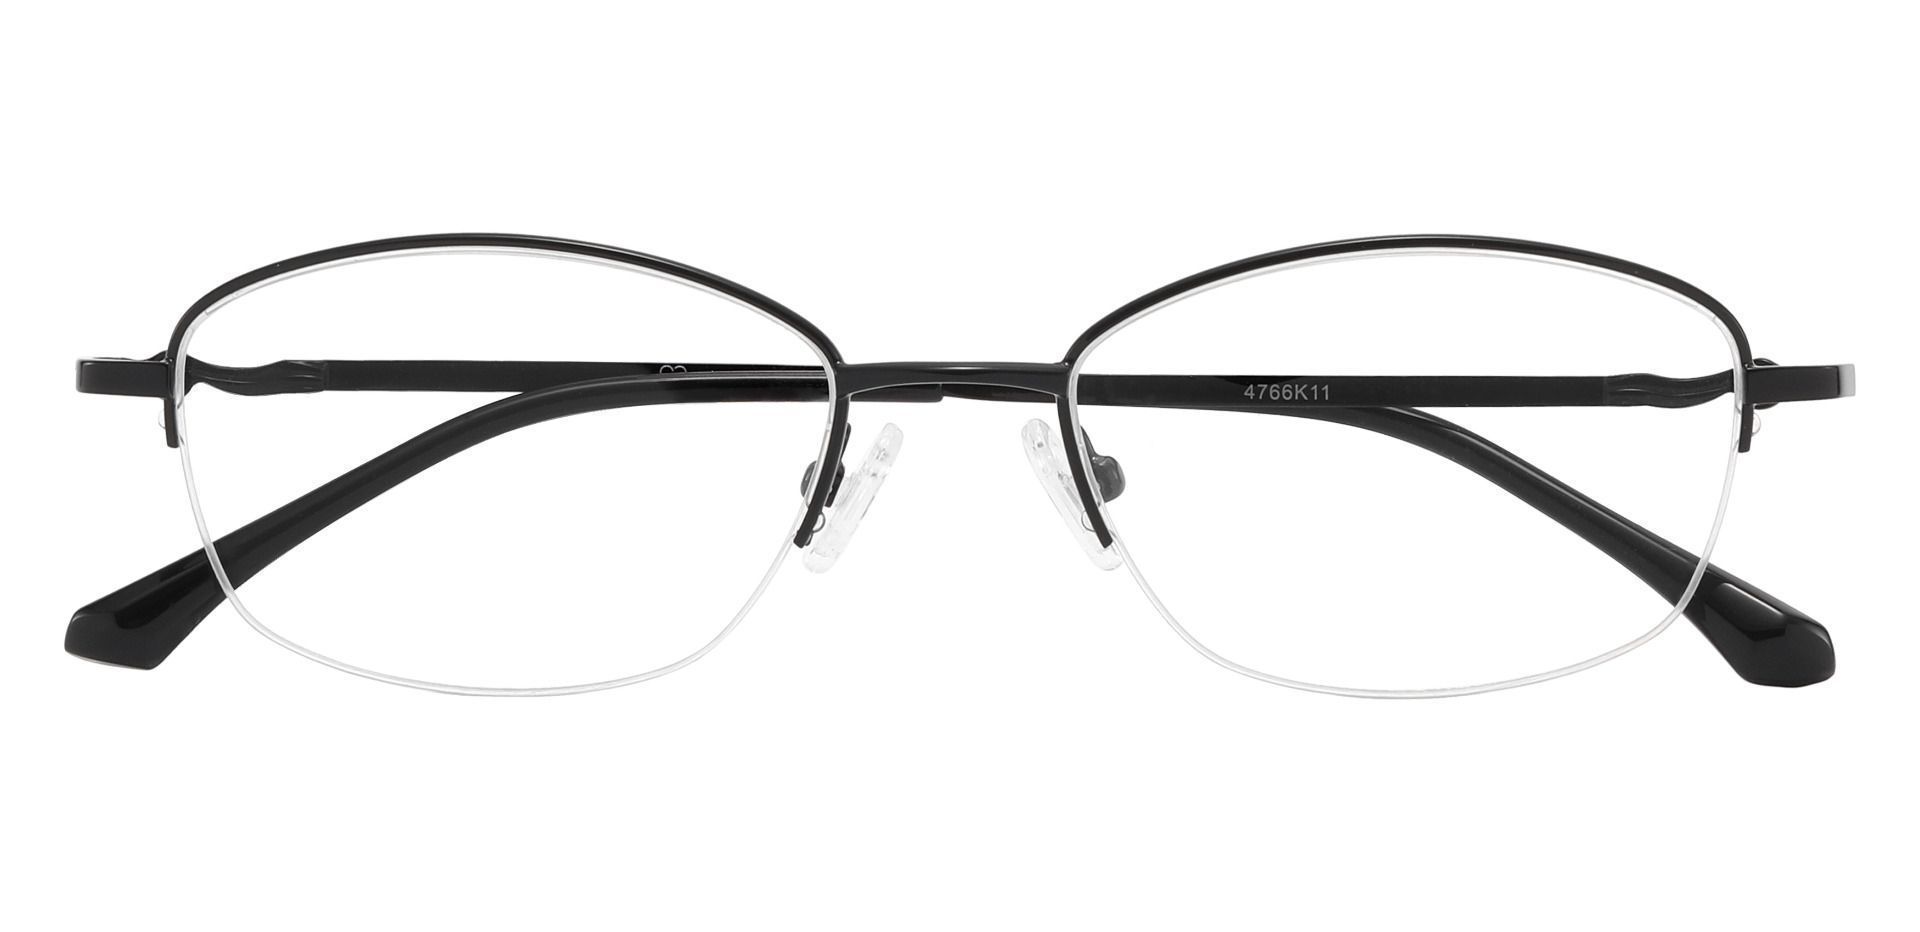 Beulah Oval Prescription Glasses - Black